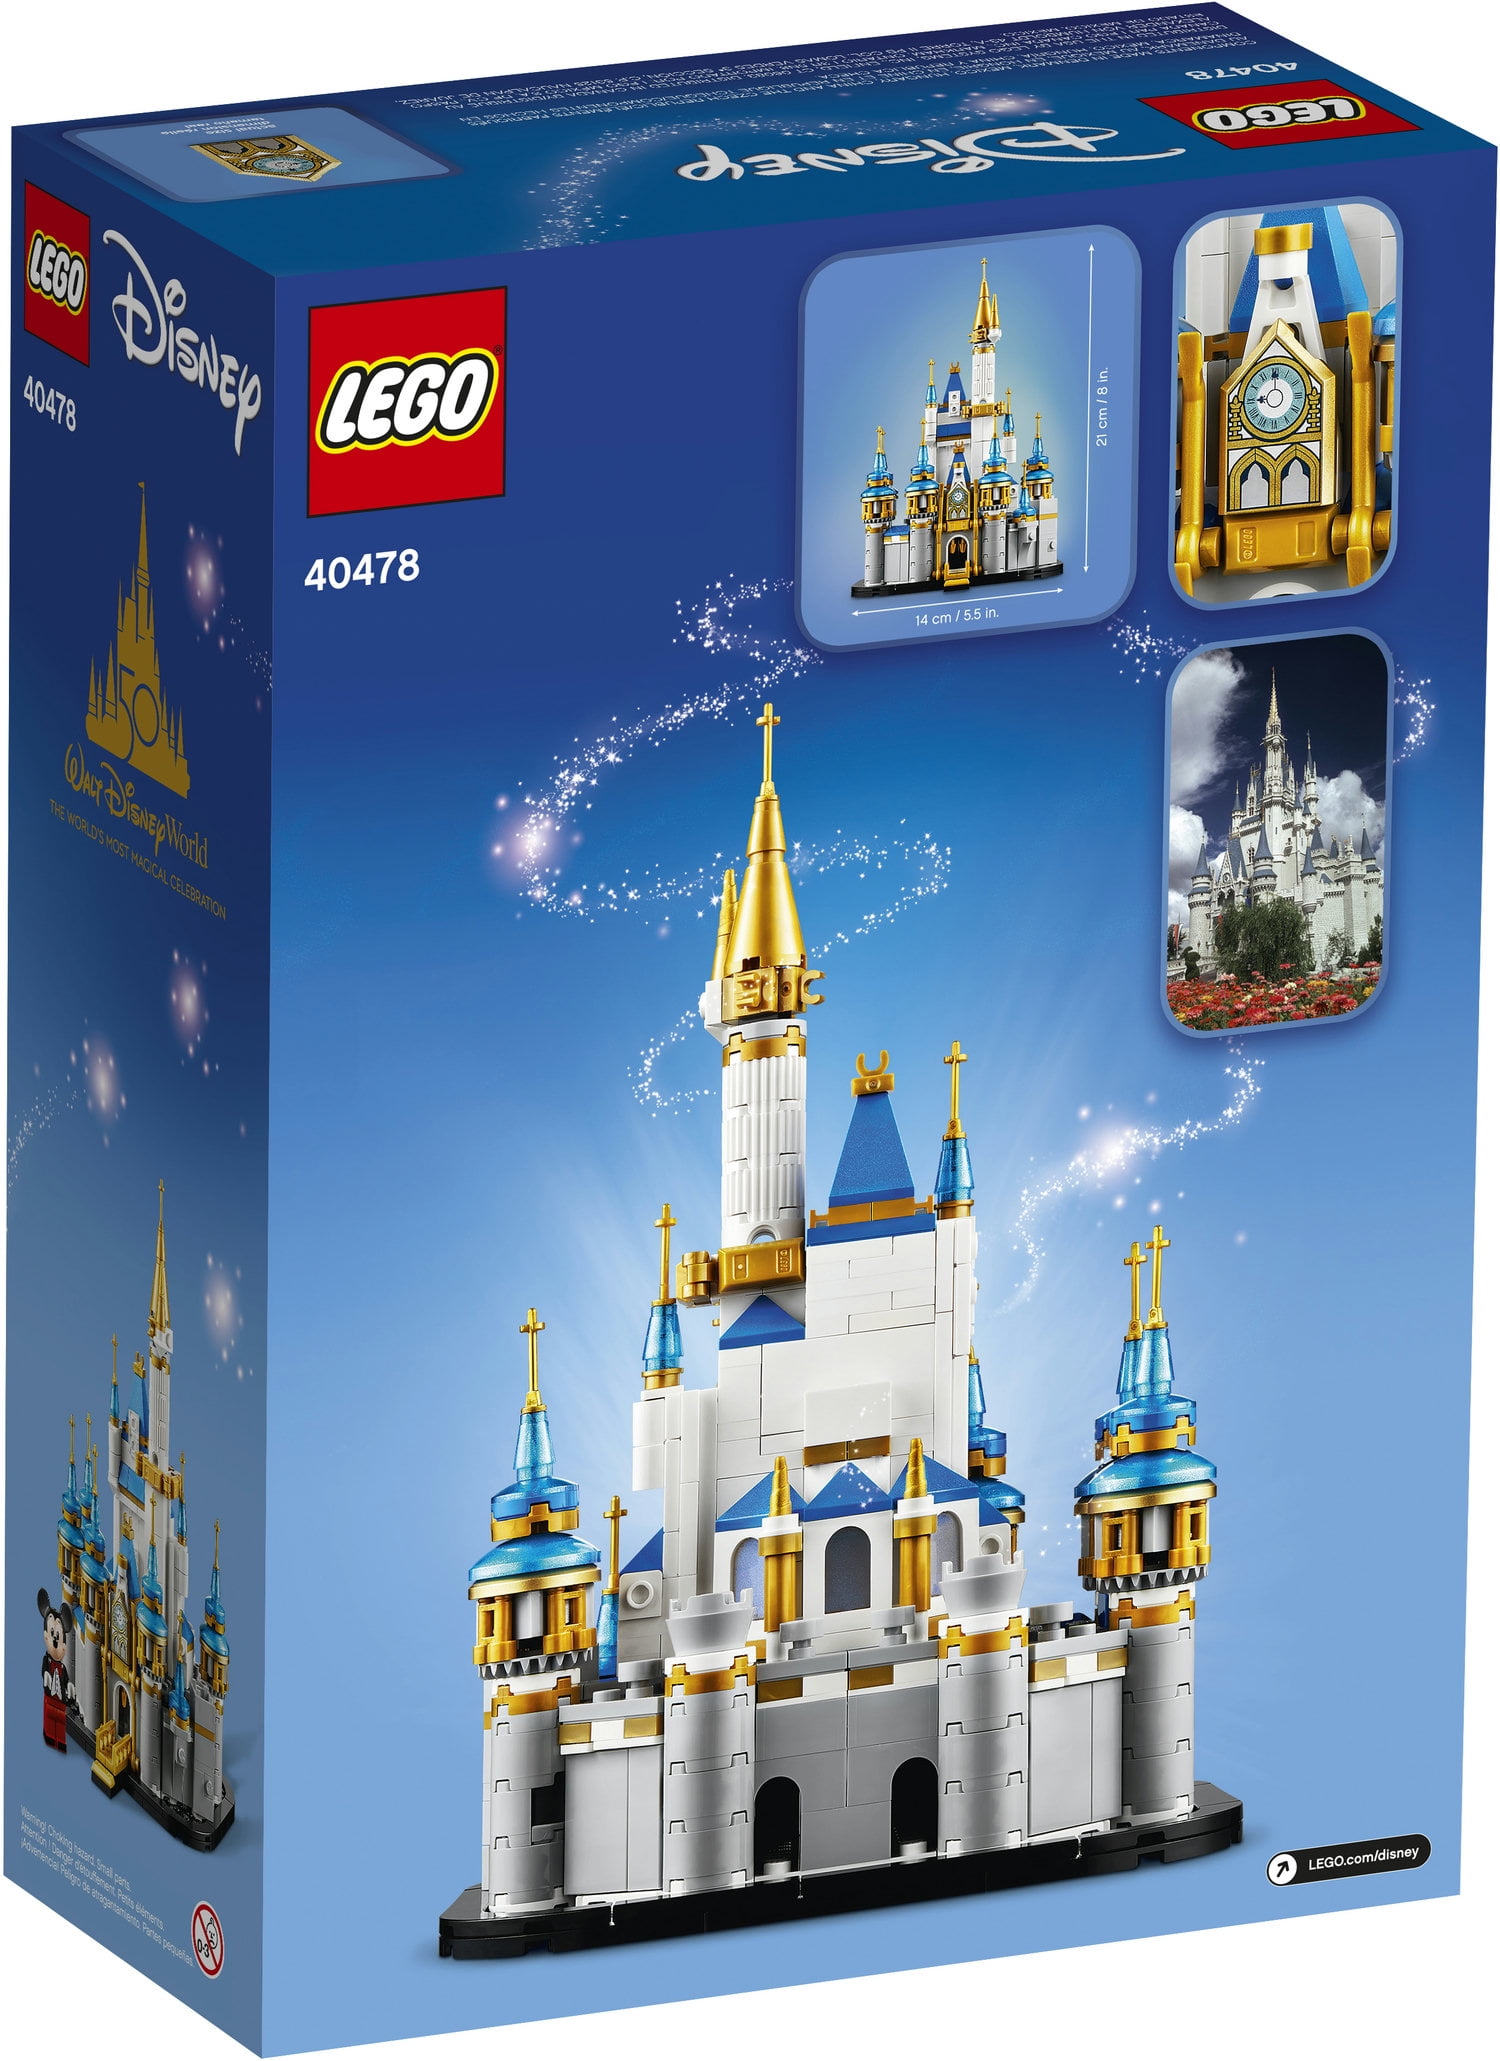 Moralsk Nebu Bane LEGO Mini Disney Castle 40478 Building Set (567 Pieces) - Walmart.com